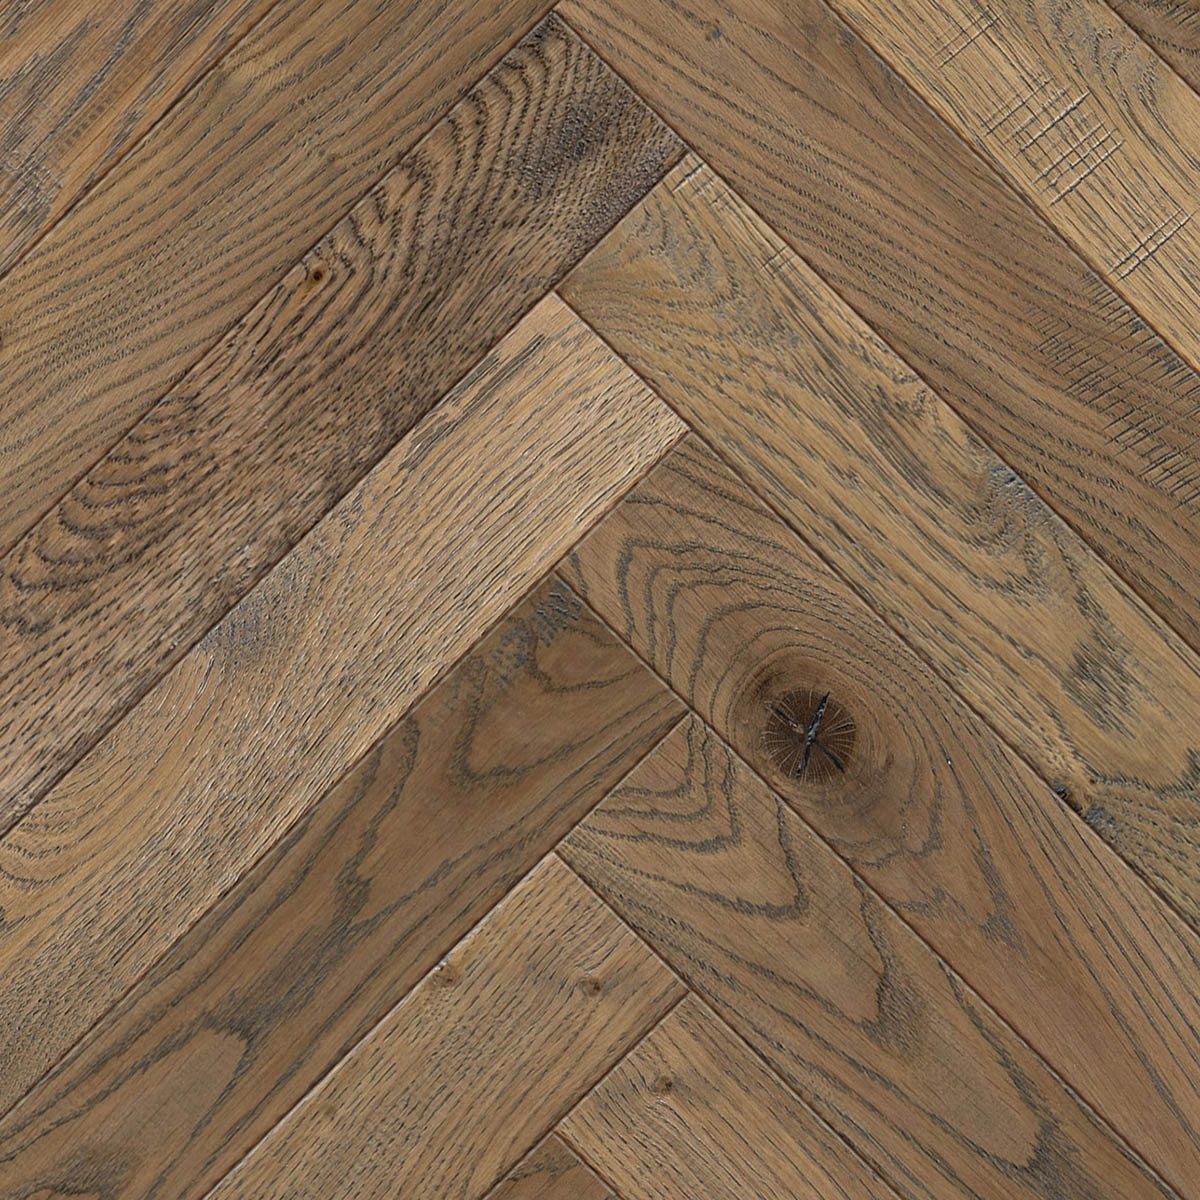 Hollowbrook Herringbone - Tumbled Edged Rustic Grade European Oak Floor